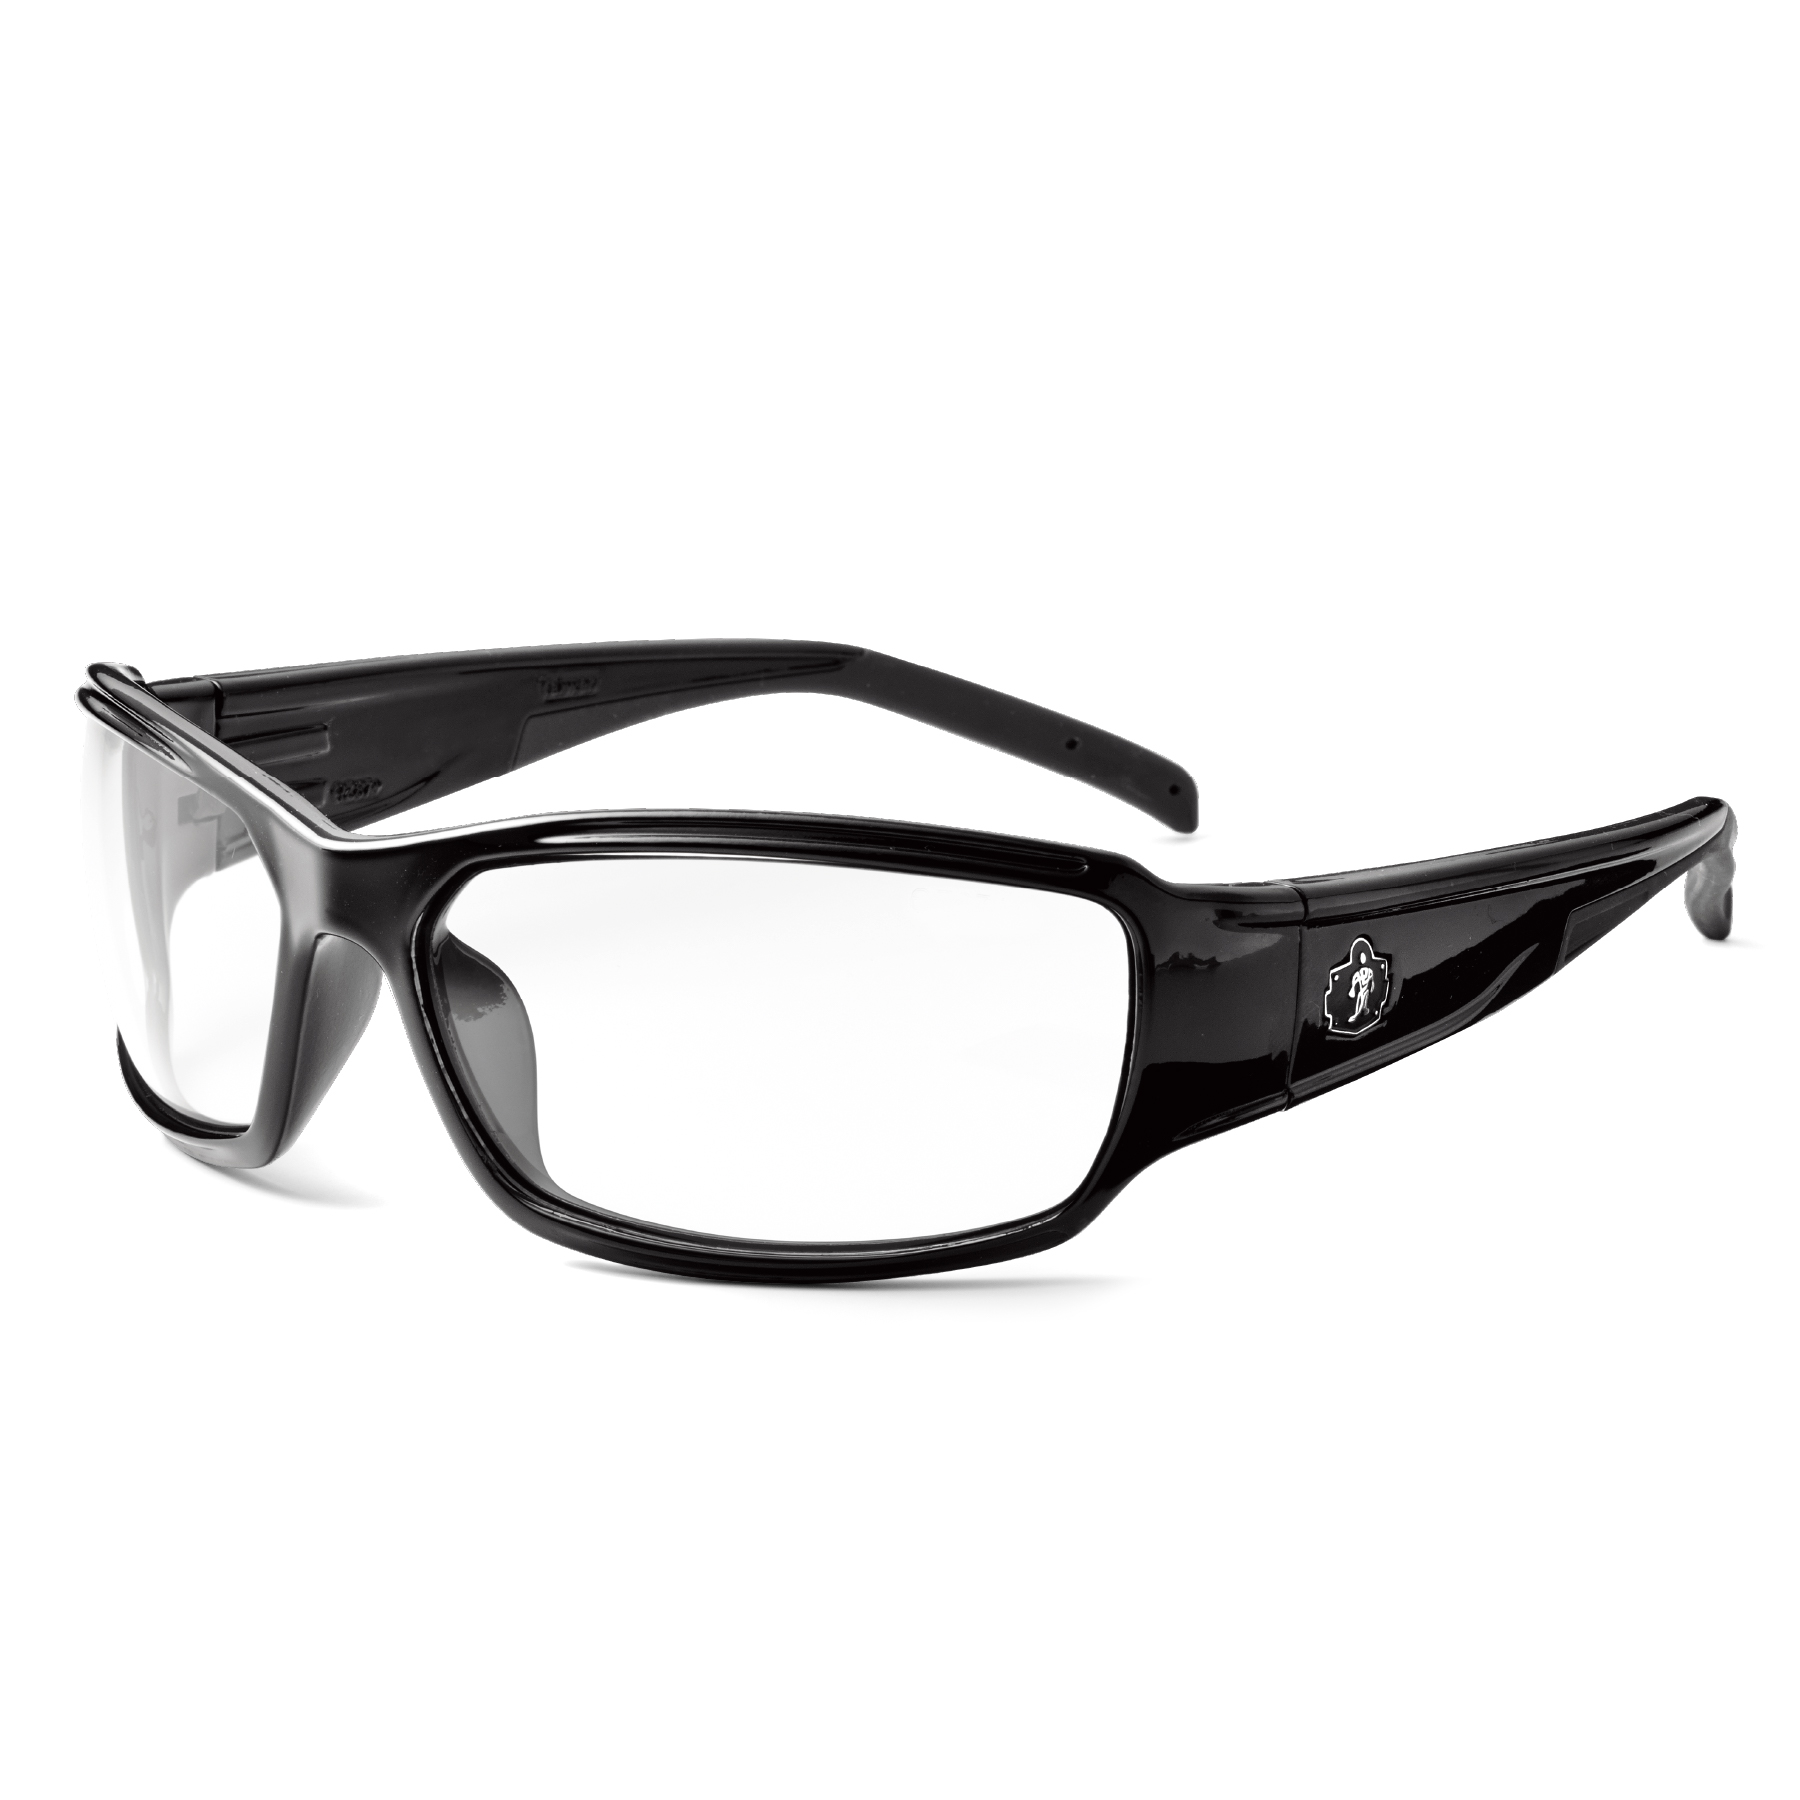 https://www.ergodyne.com/sites/default/files/product-images/51000-thor-safety-glasses-3q-black-frame-clear.jpg